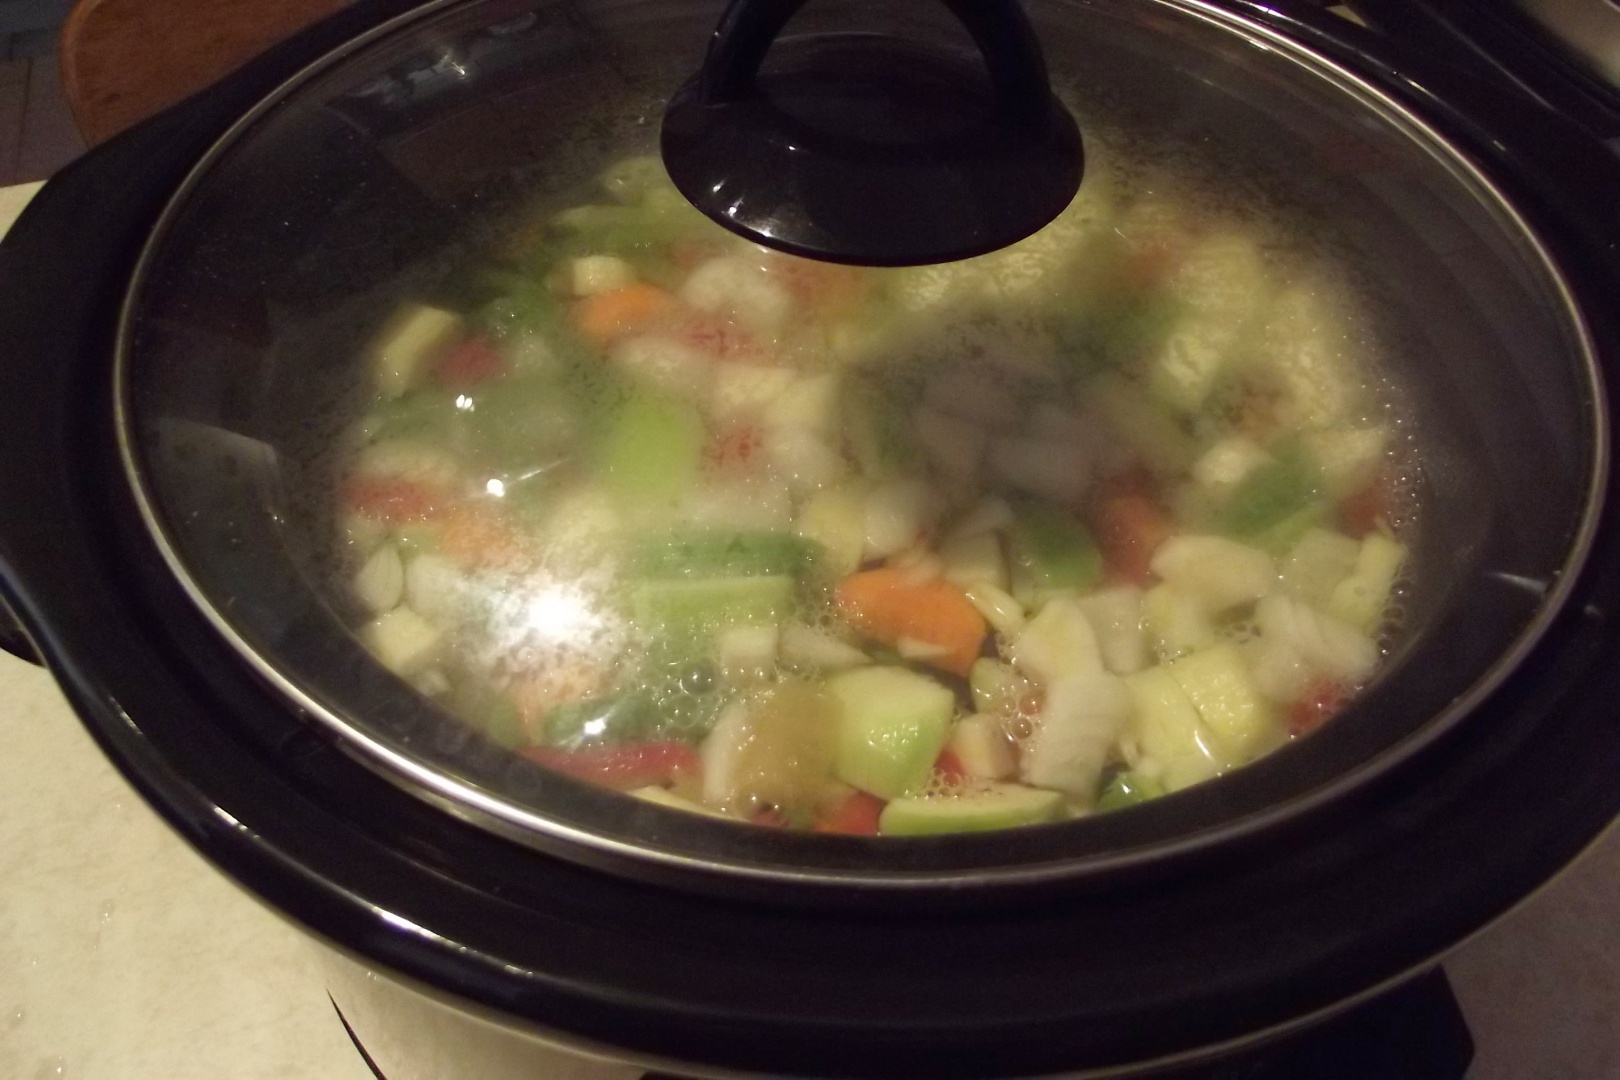 Ciorba de fasole verde si dovlecei la slow cooker Crock-Pot 4,7 L